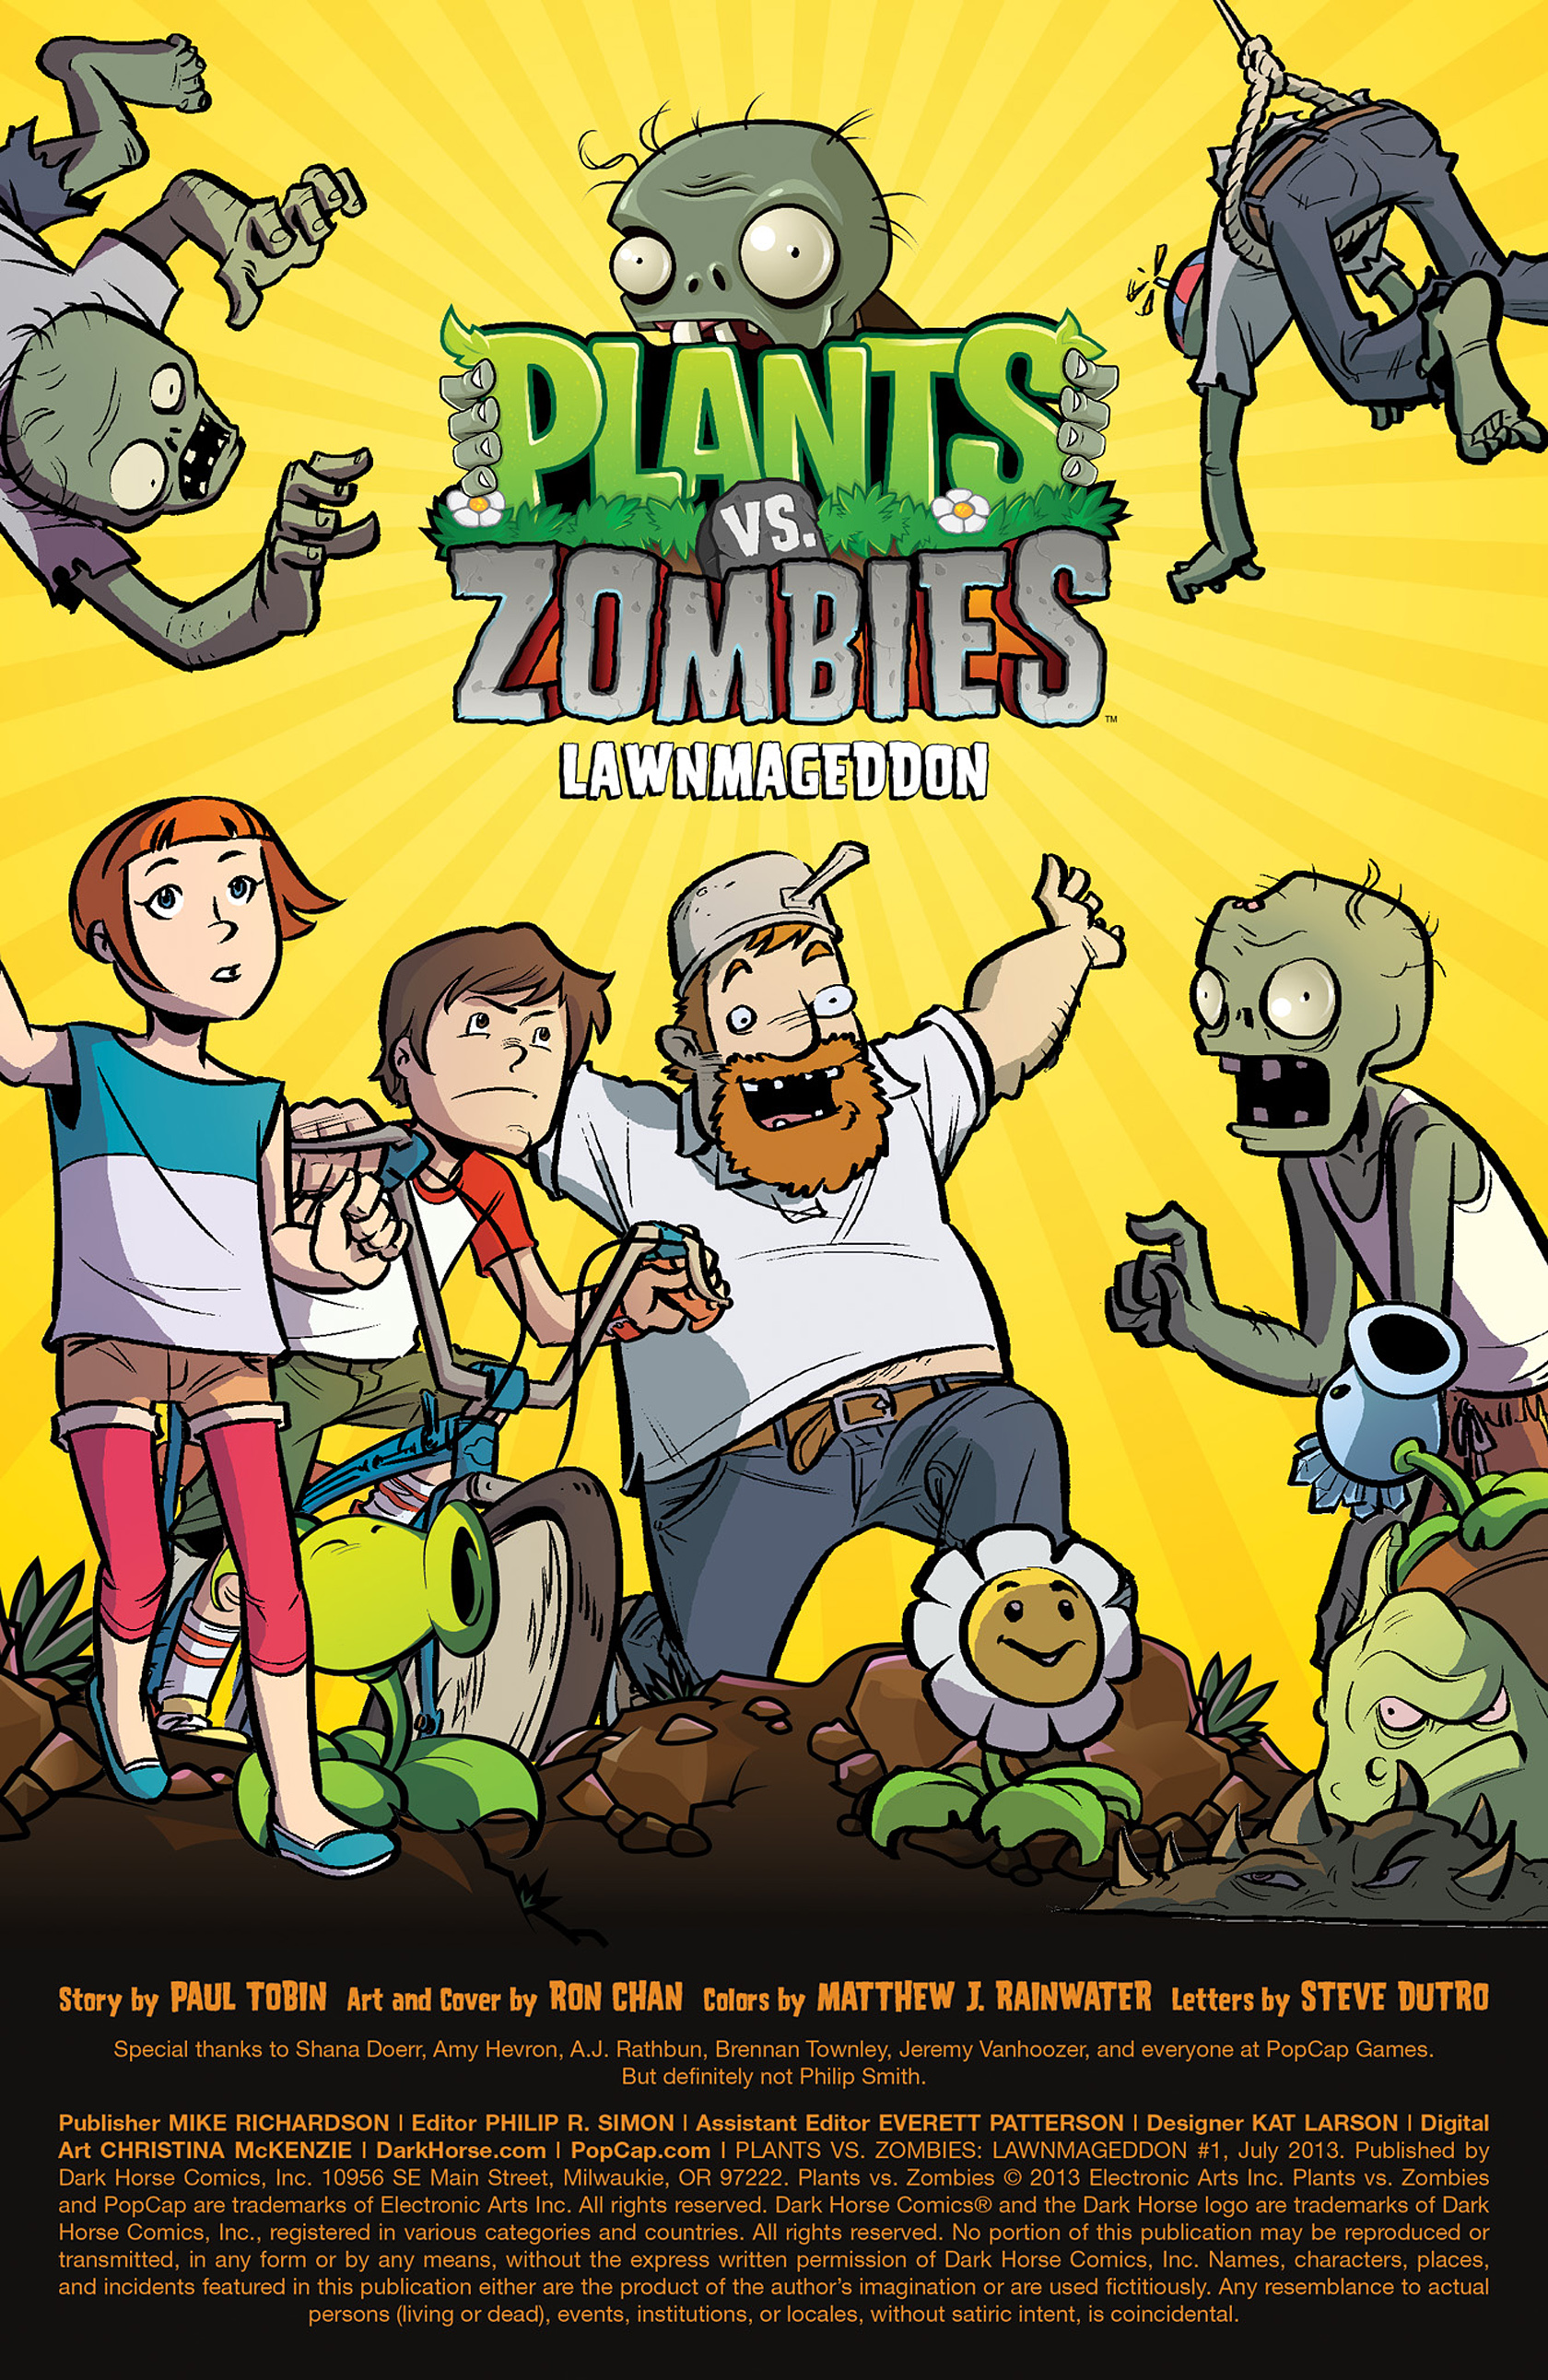 Read online Plants vs. Zombies: Lawnmageddon comic -  Issue #1 - 2